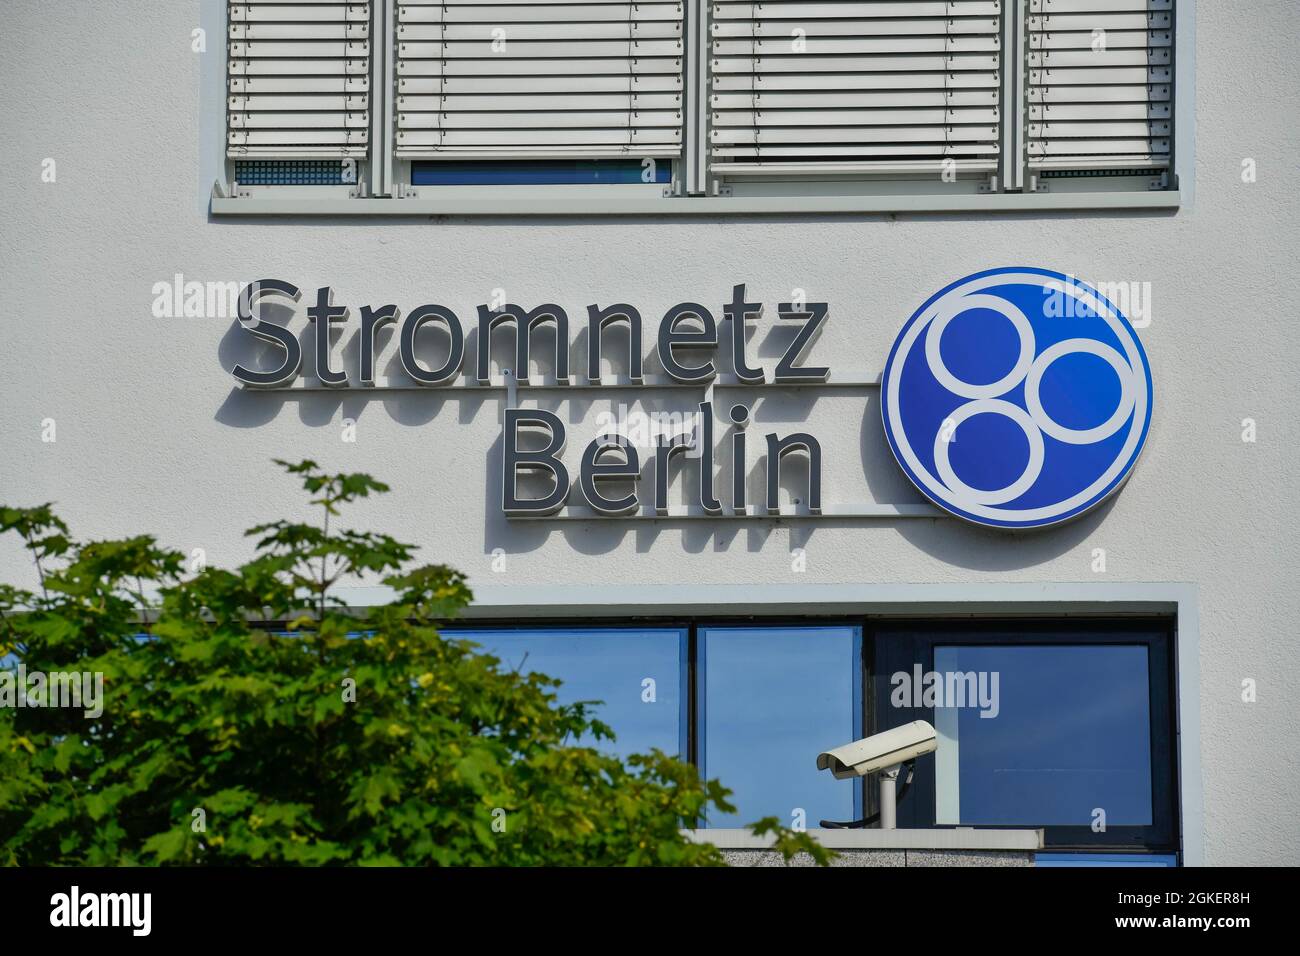 Stromnetz Berlin GmbH, Eichenstrasse, Treptow, Treptow-Koepenick, Berlin, Germany Stock Photo